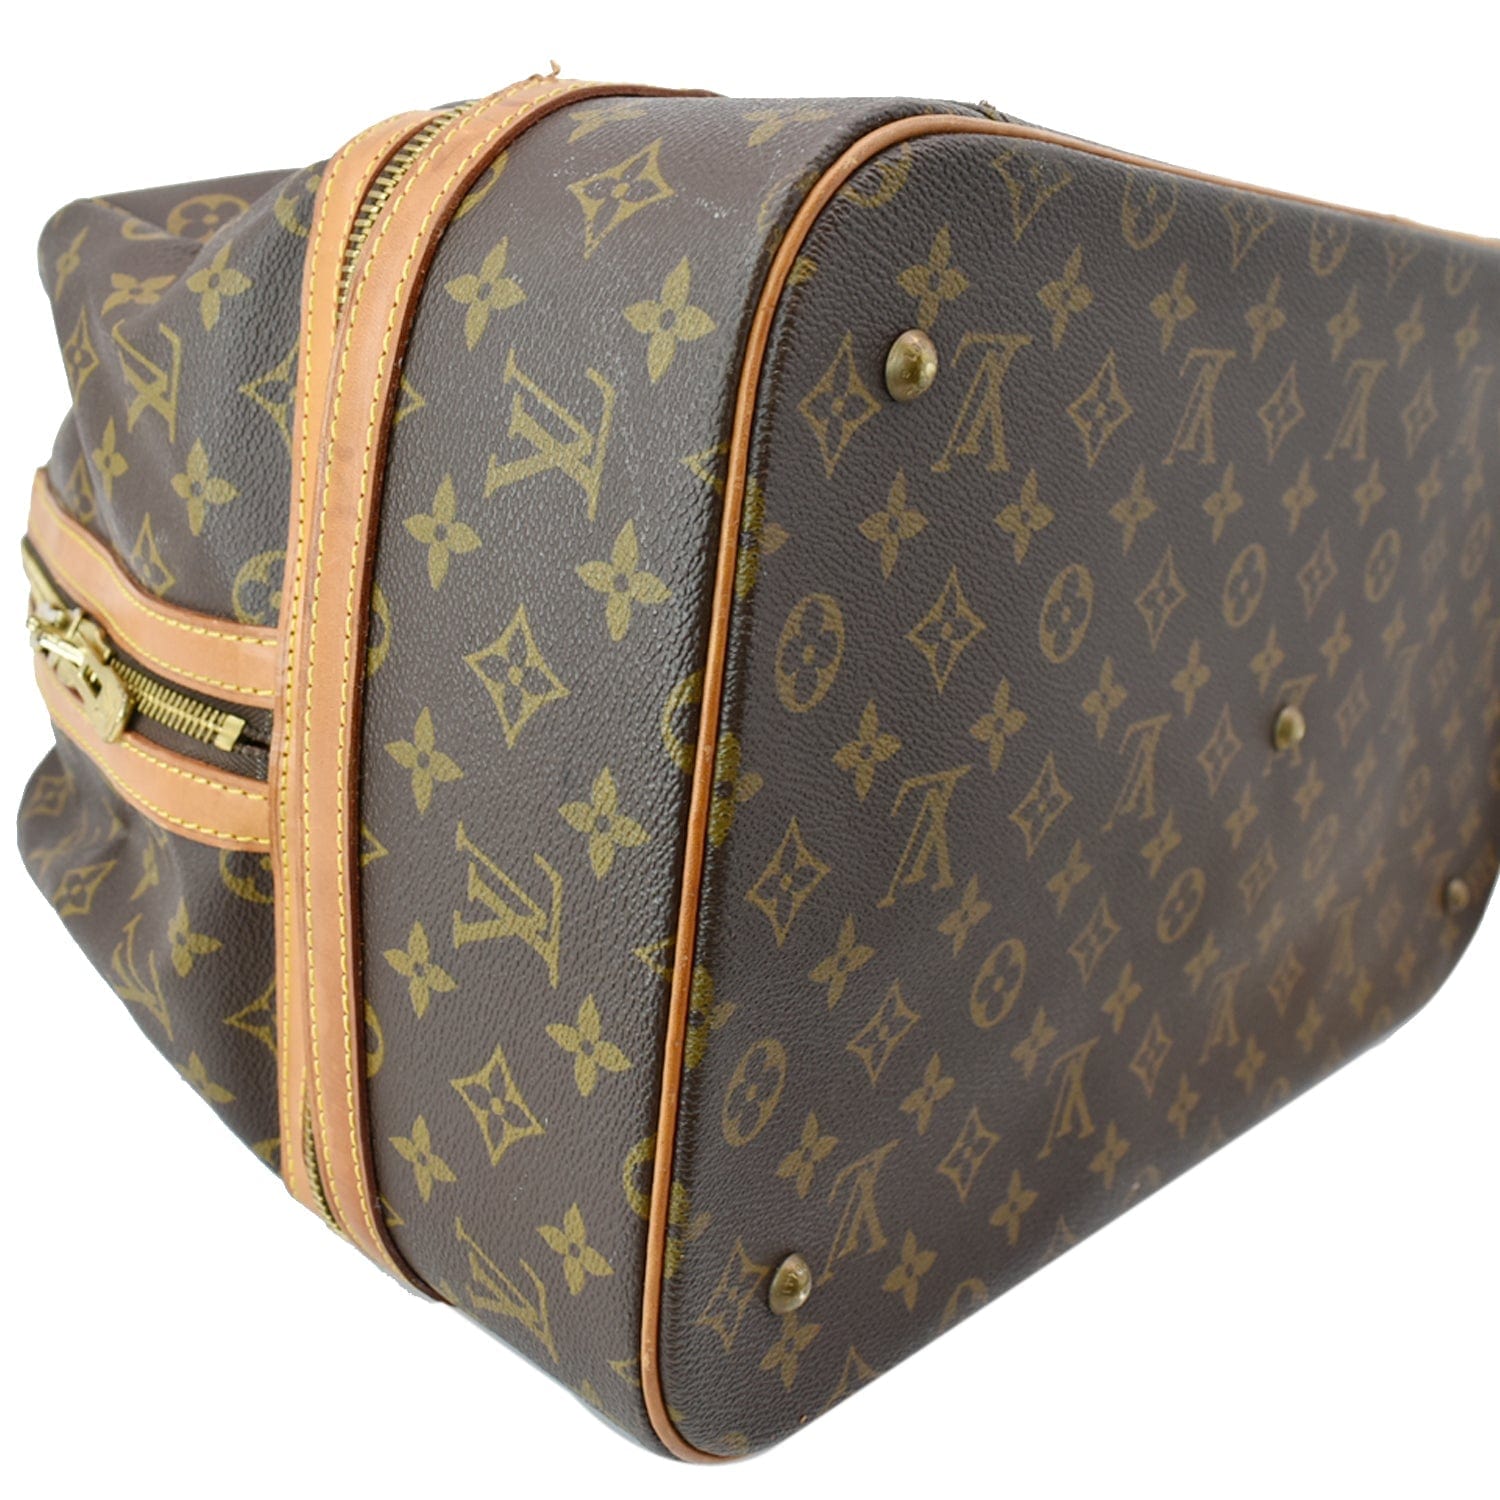 Louis Vuitton Sac Sport Duffle Monogram 870602 Brown Coated Canvas  Weekend/Travel Bag, Louis Vuitton